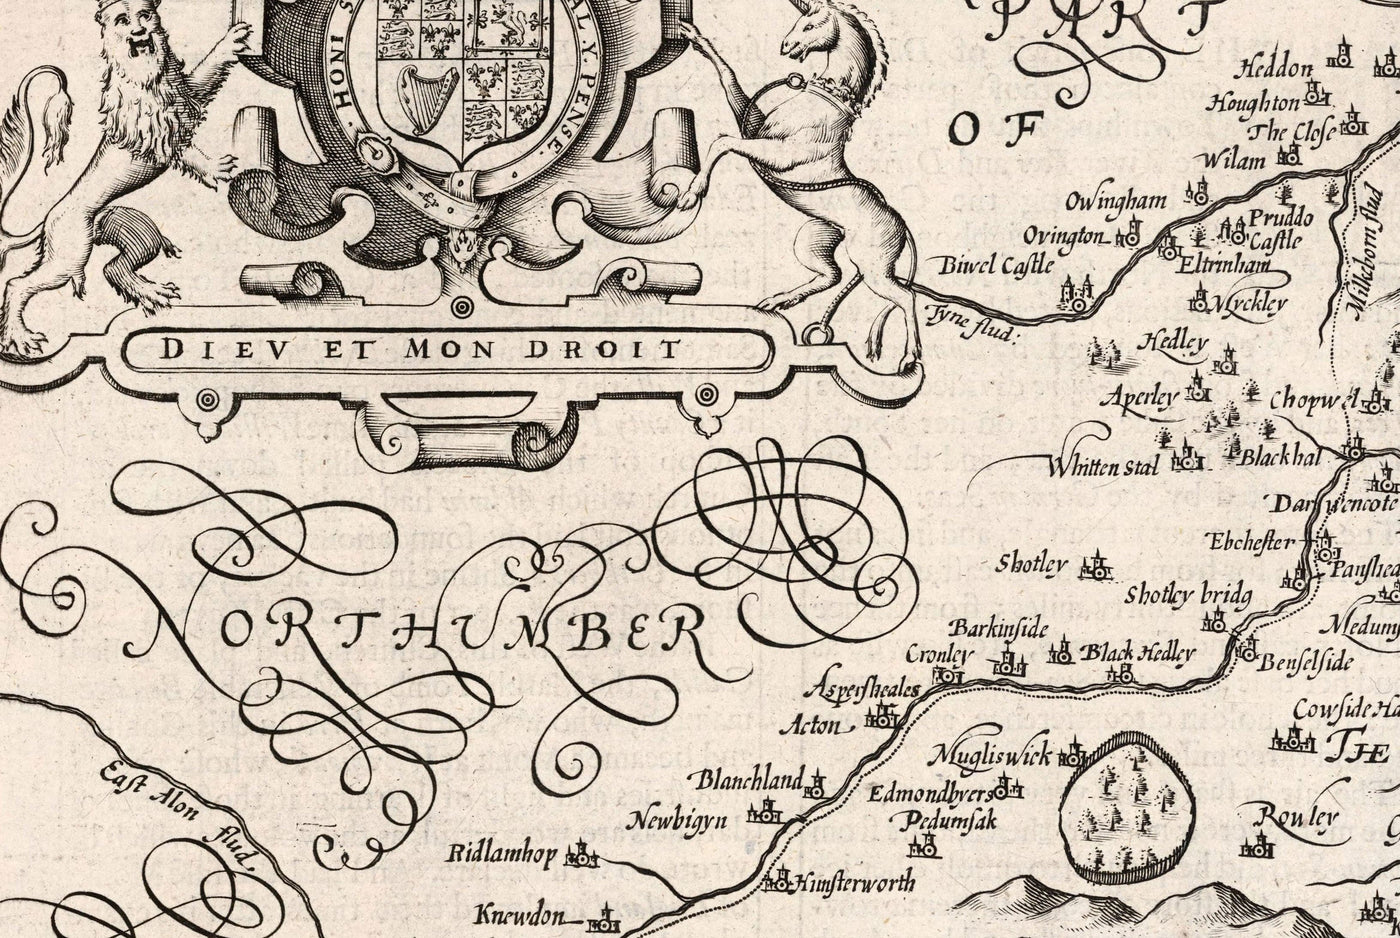 Old Monochrome Carte du comté Durham, 1611 par John Vitesse - Darlington, Stockton-On-Tees, Sunderland, Newcastle